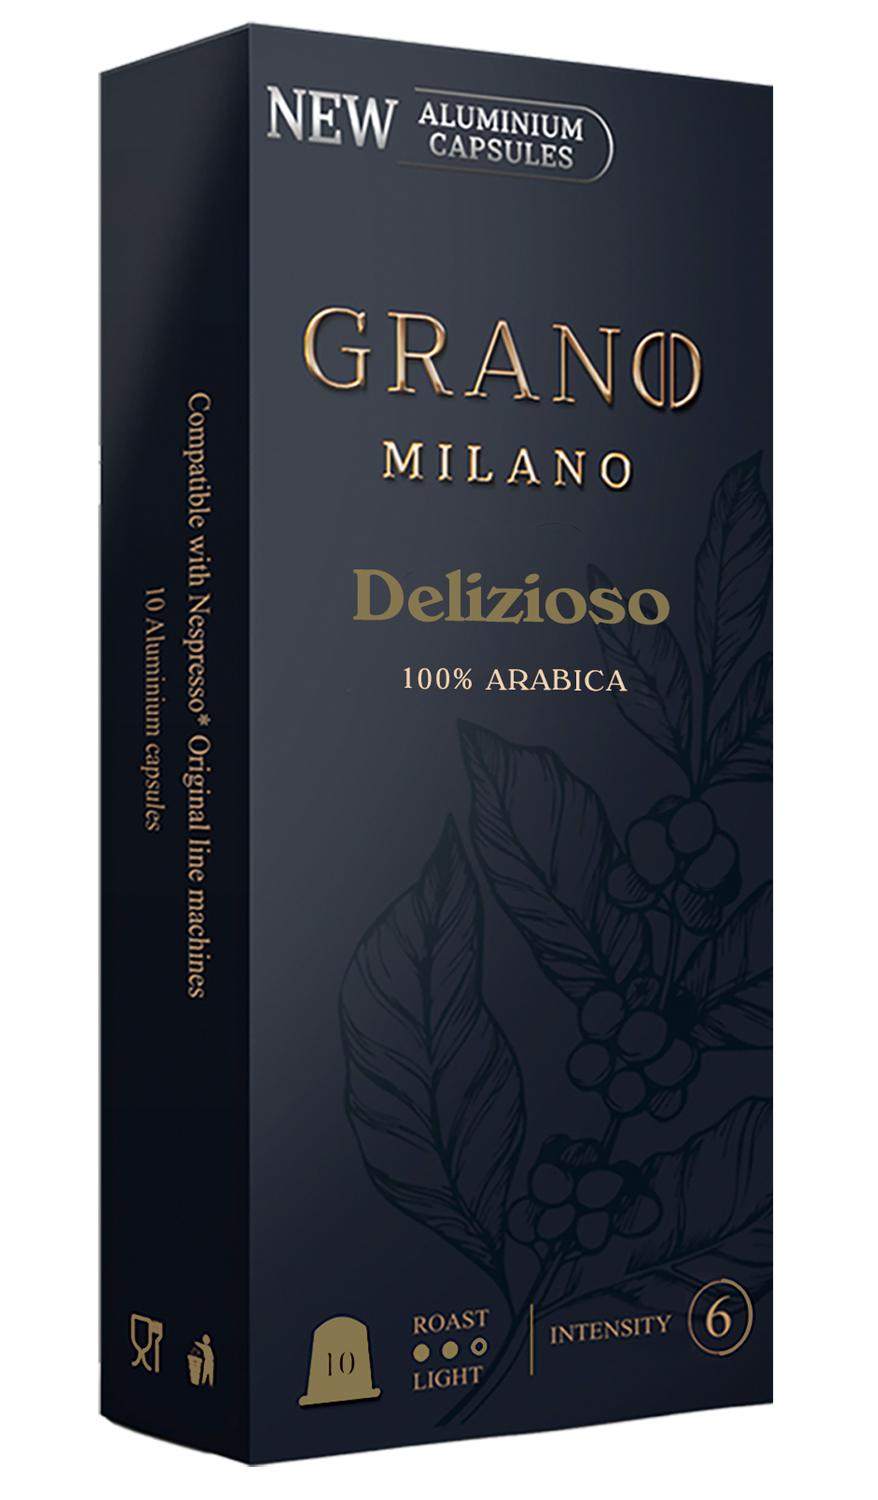 Кофе GRANO MILANO DELIZIOSO 10 алюминиевых капсул. Интенсивность 6